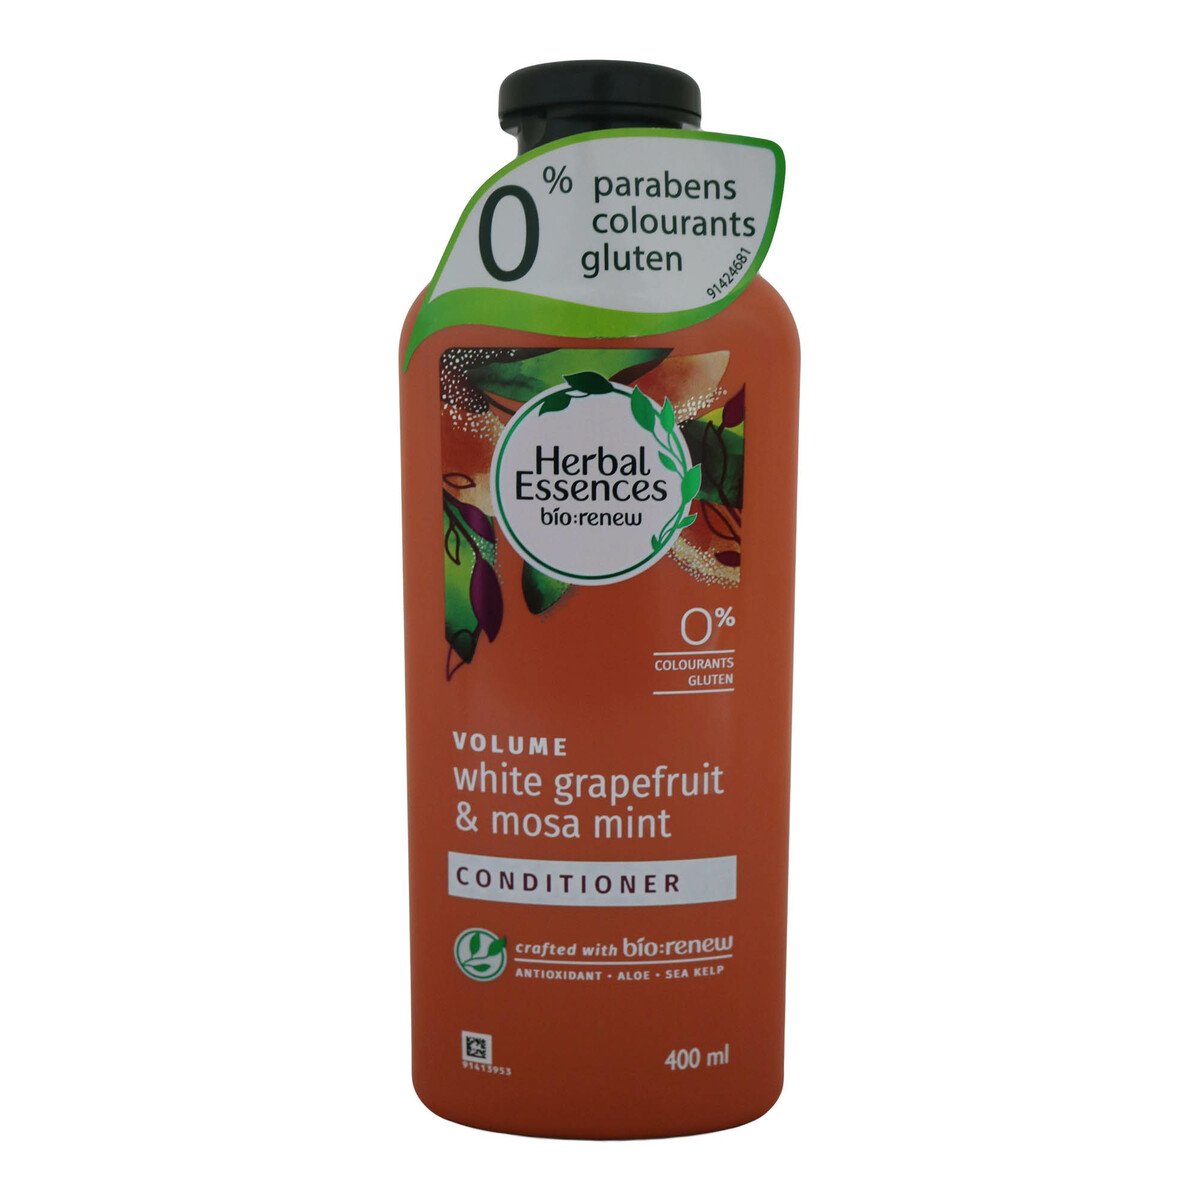 Herbal Essences Conditioner Volume White Grapefruit & Mosa Mint 400ml